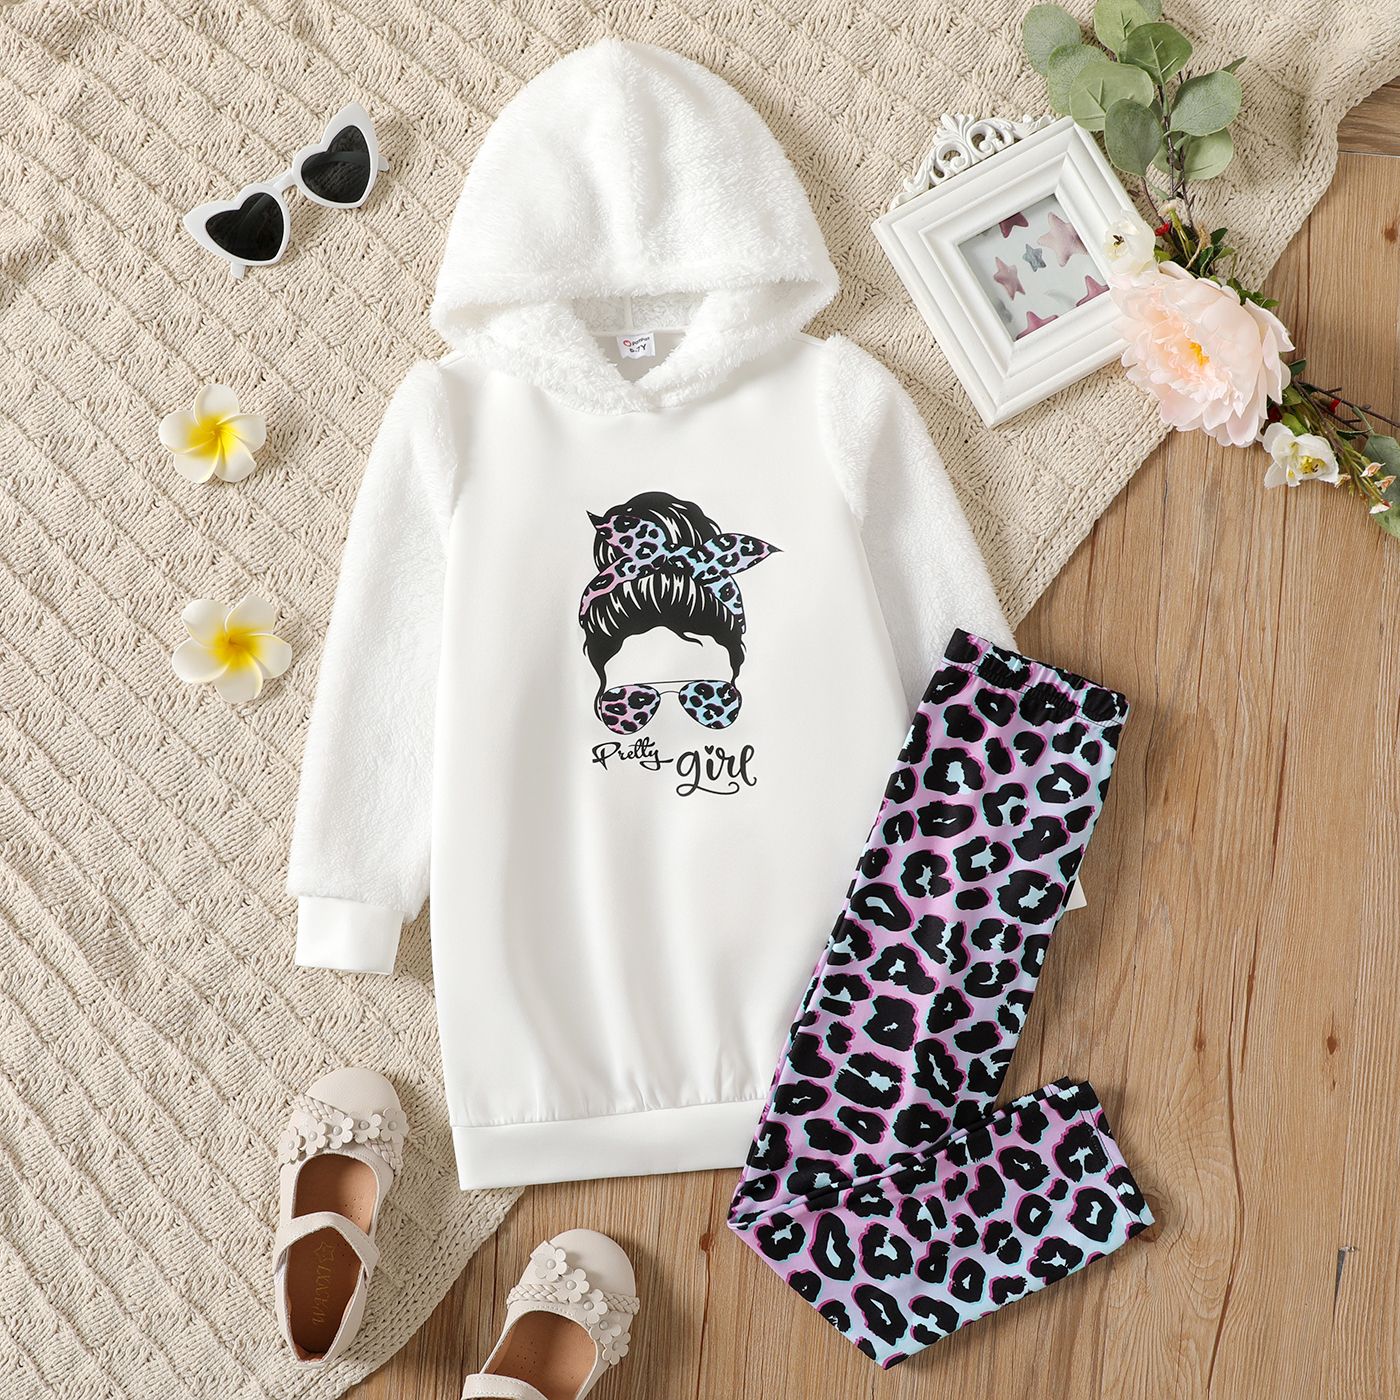 2pcs Kid Girl Character Print Fleece Splice Goodie Sweatshirt and Leopard Print Leggings Set